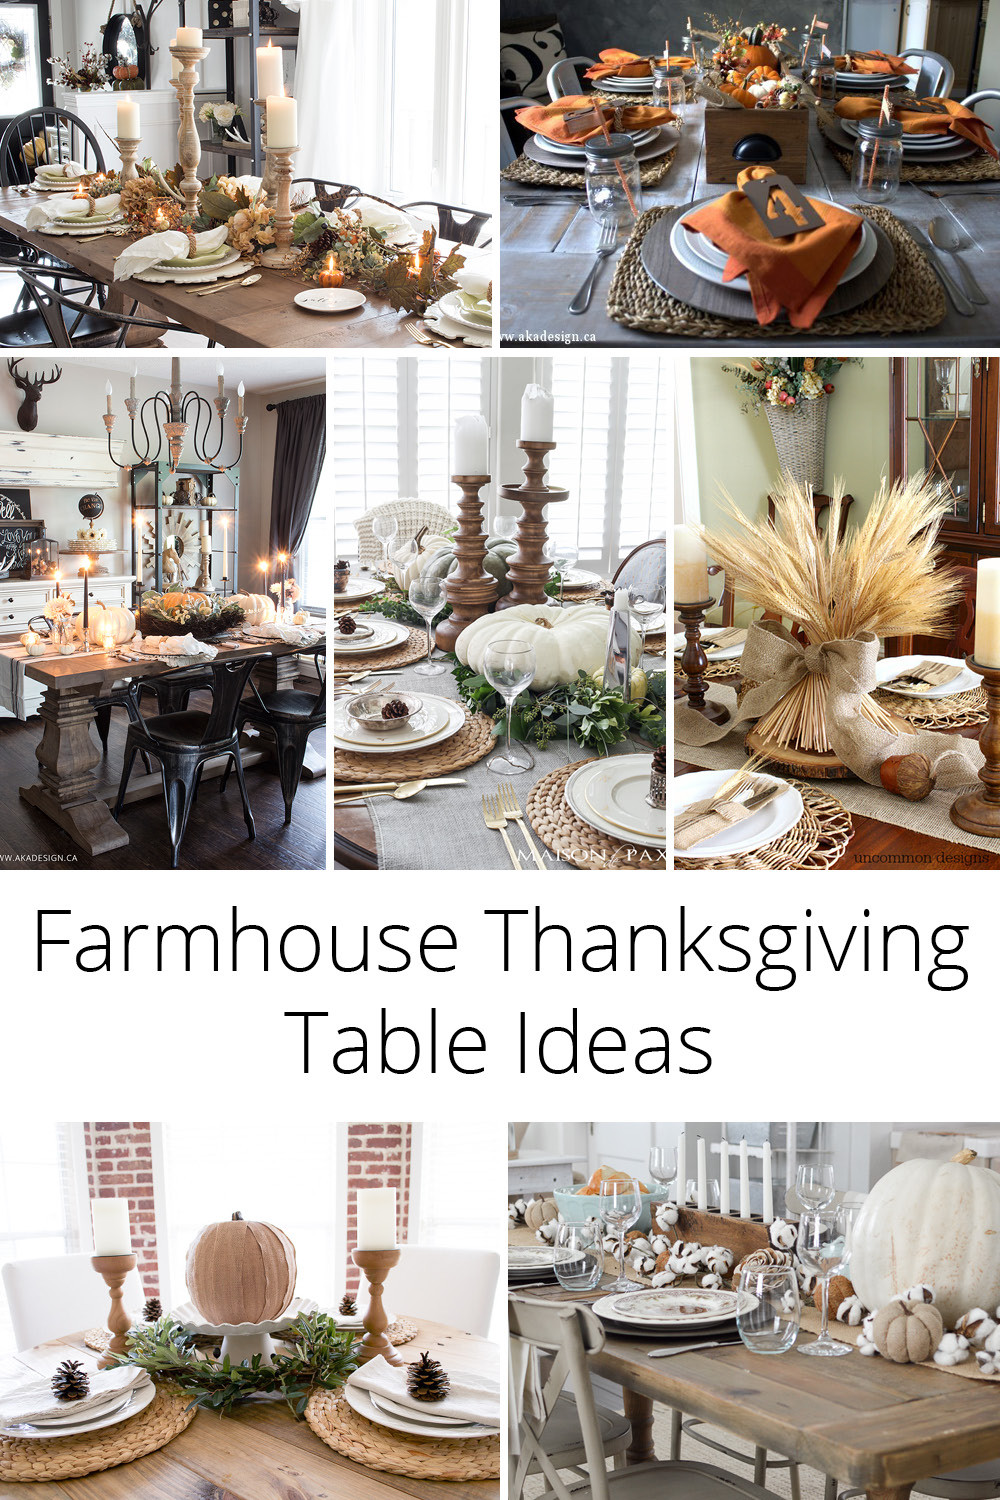 Thanksgiving Table Decorations Pinterest
 13 Farmhouse Thanksgiving Table Ideas to Help You Decorate